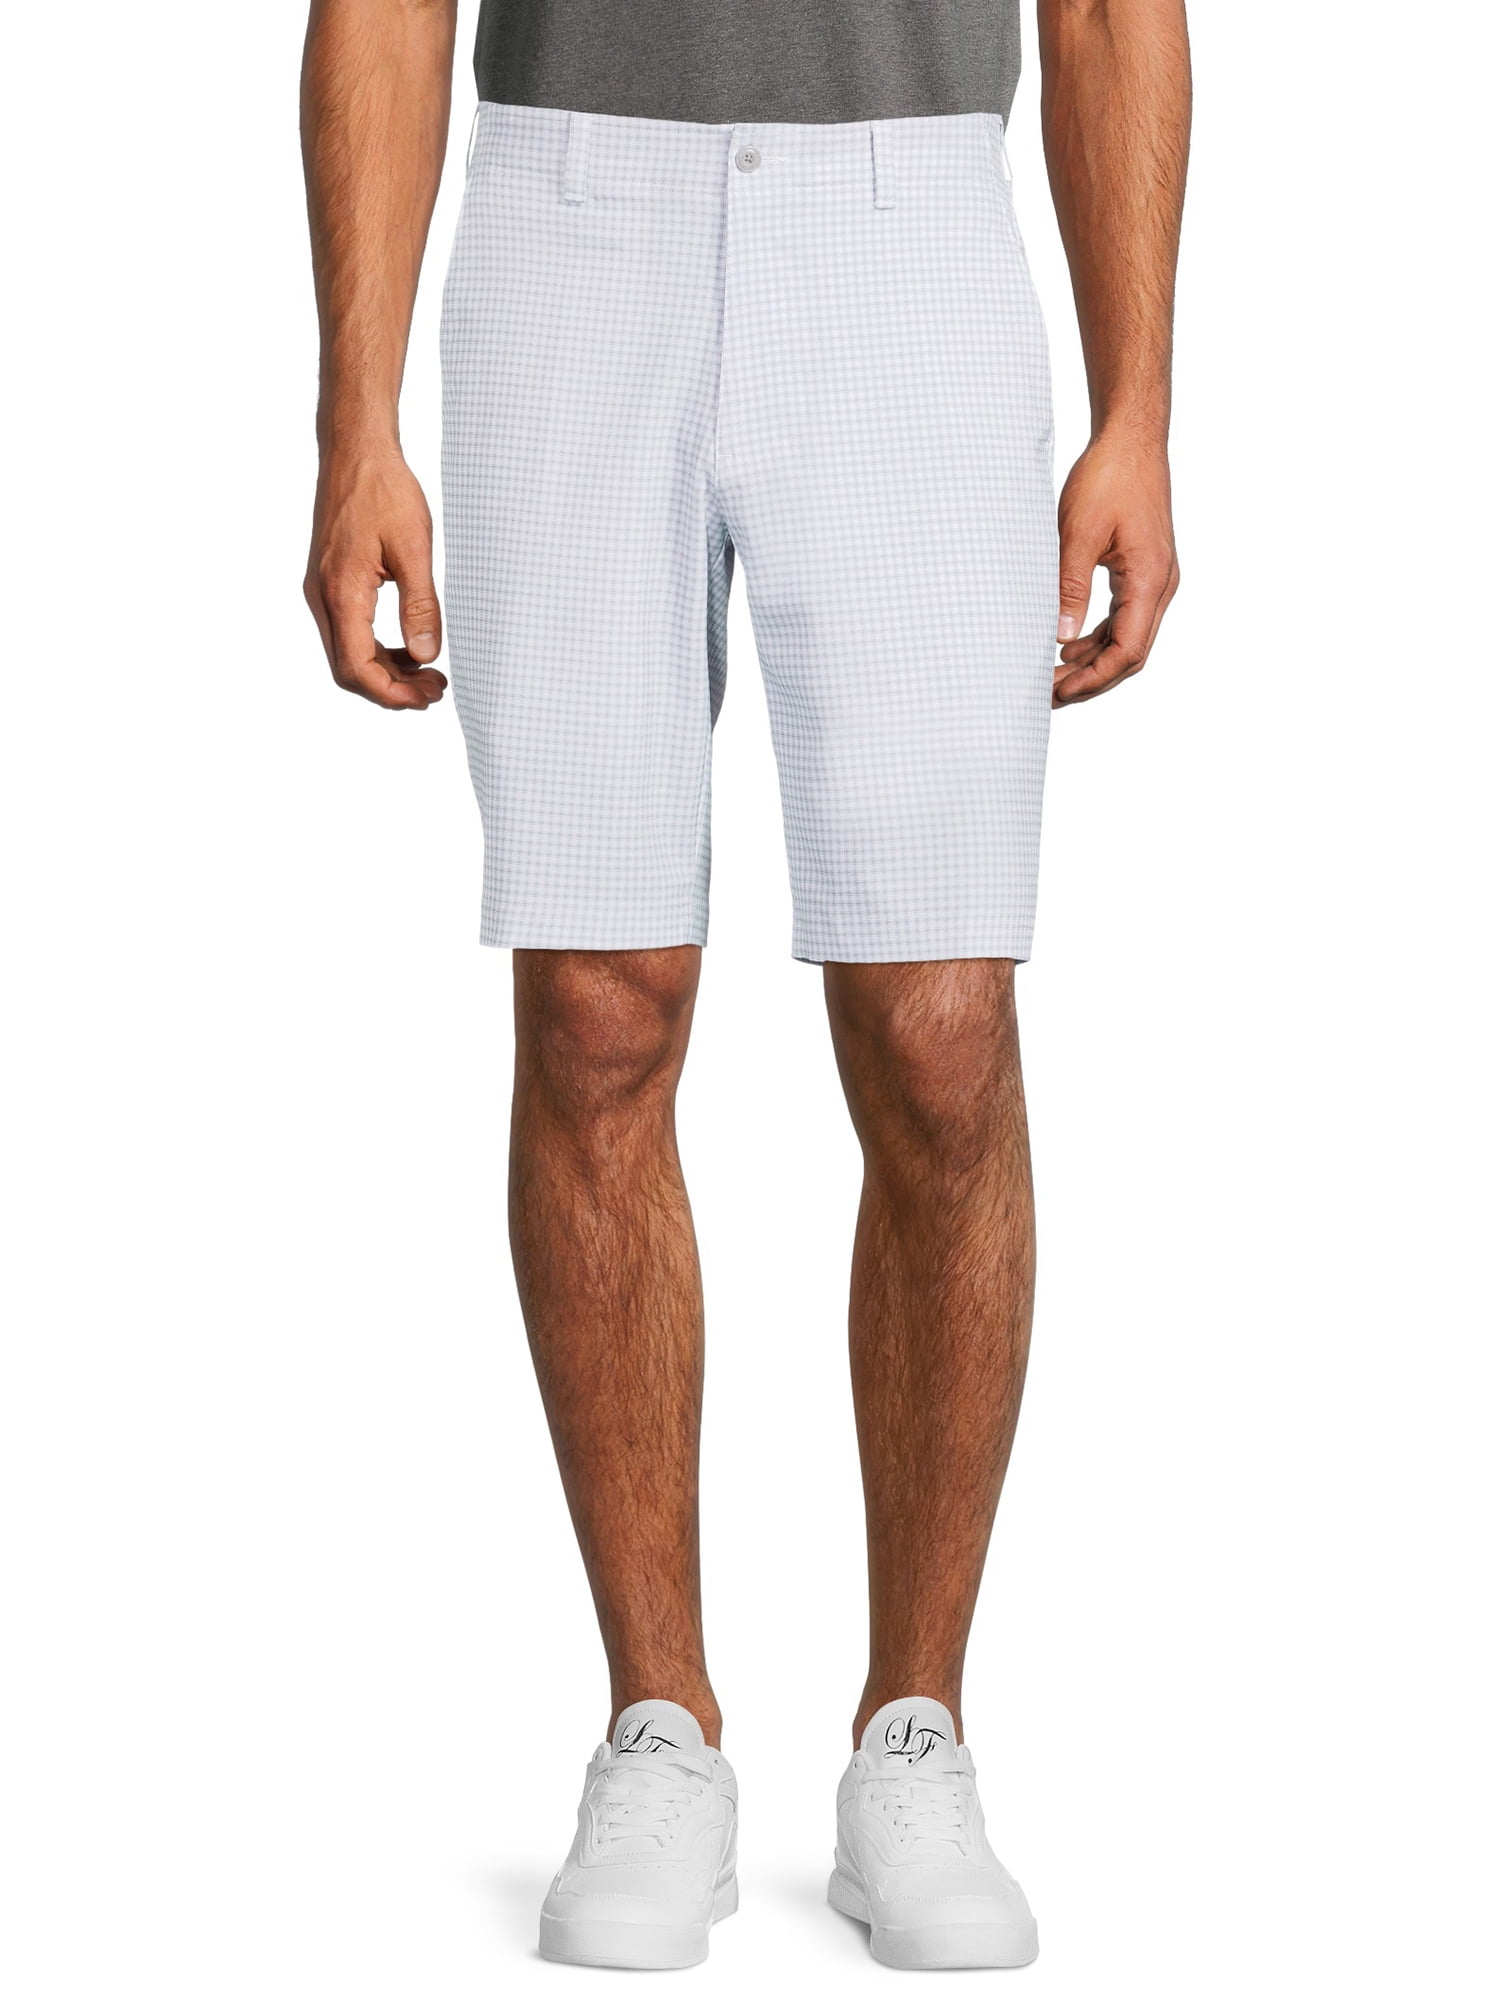 Buy > ben hogan golf shorts walmart > in stock